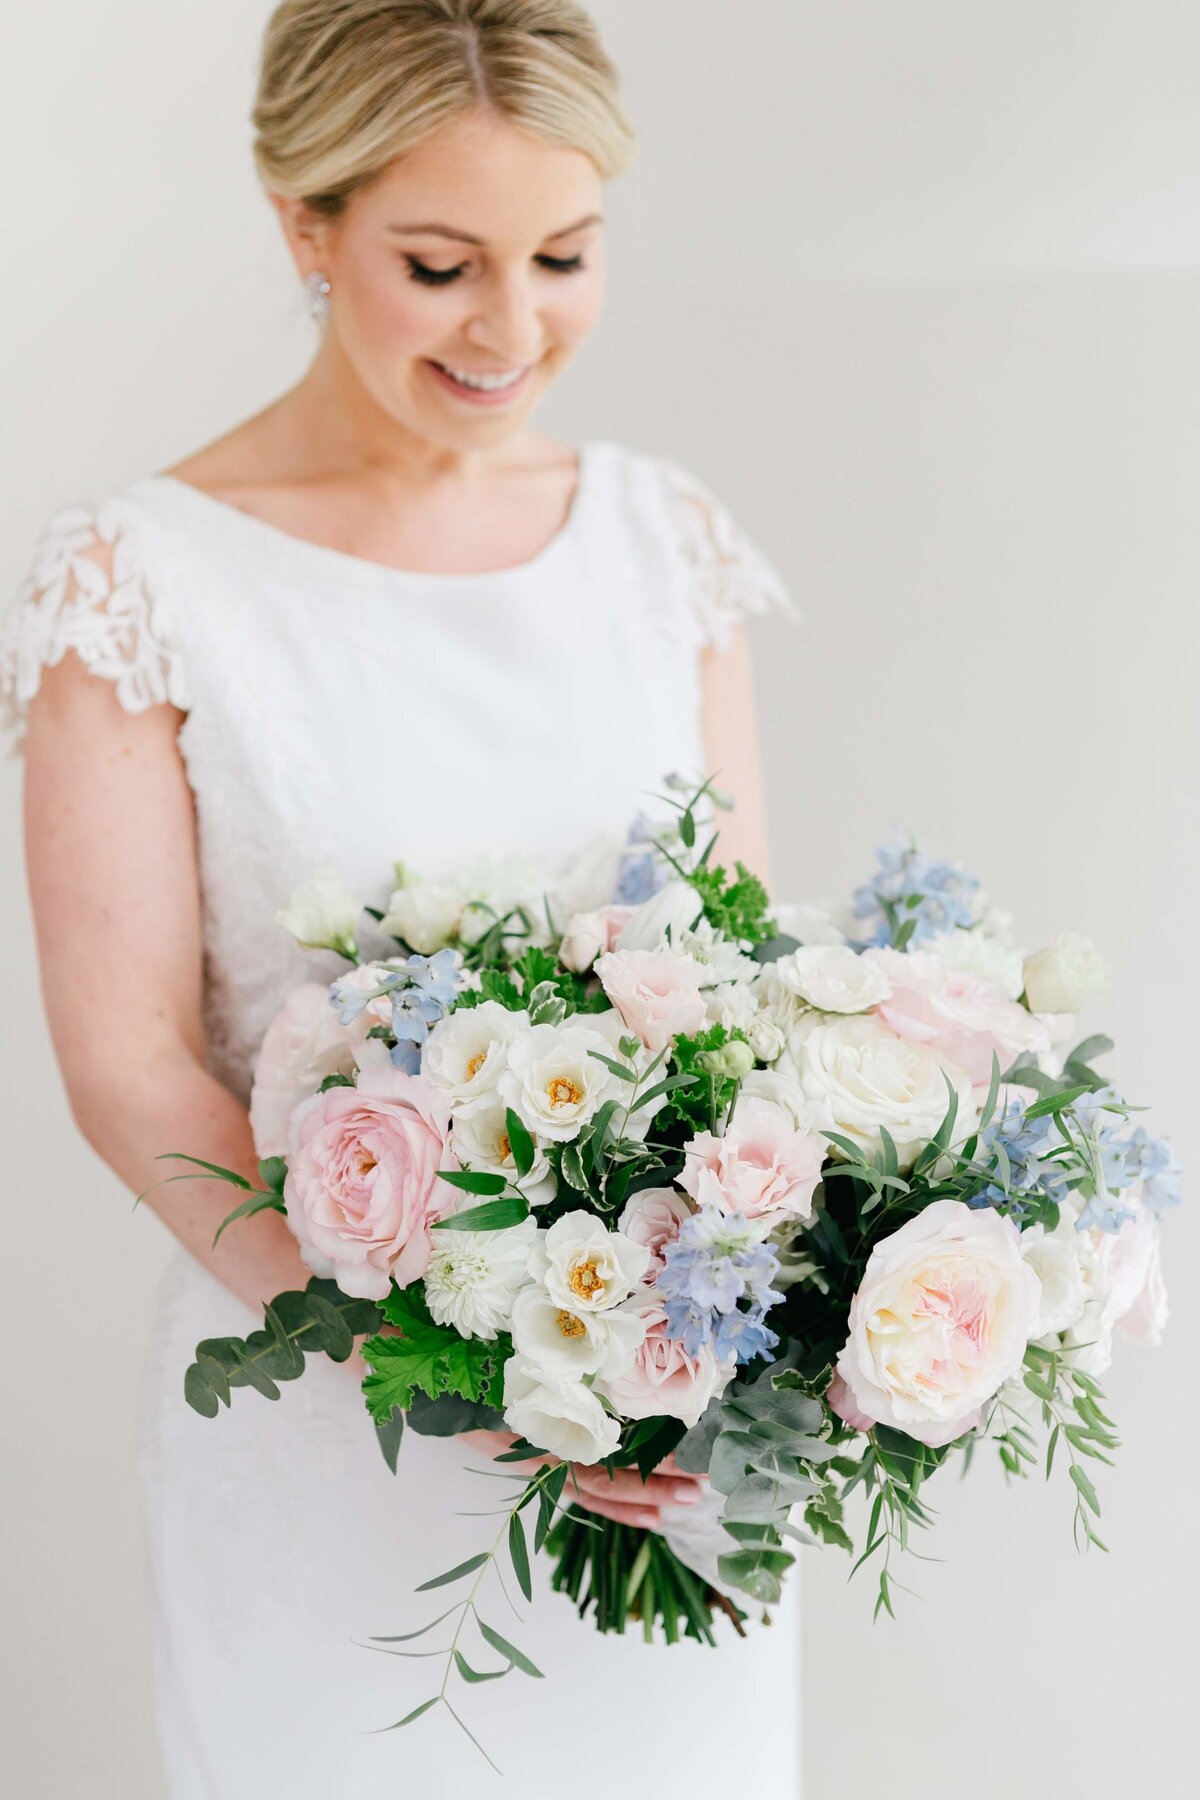 sebesta-design-best-wedding-florist-event-designer-philadelphia-pa00007